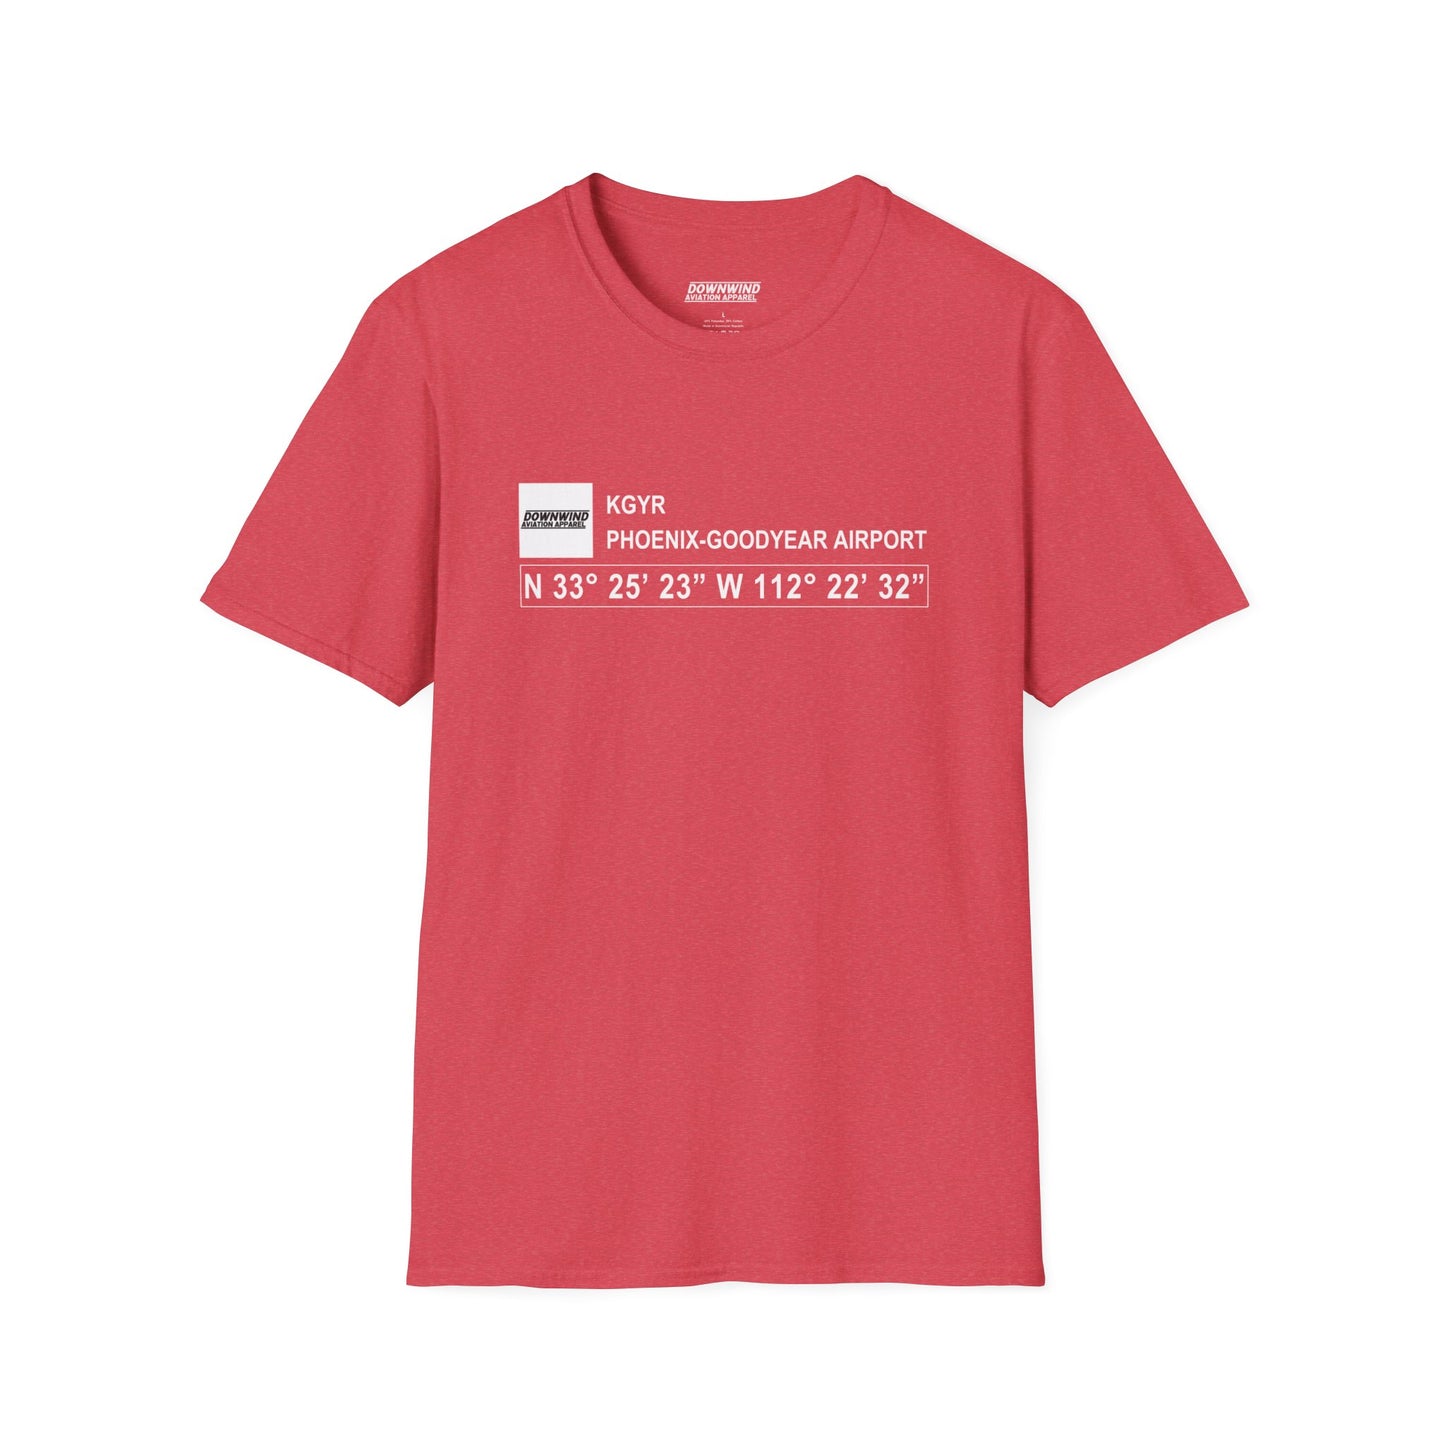 KGYR / Phoenix-Goodyear Airport T-Shirt